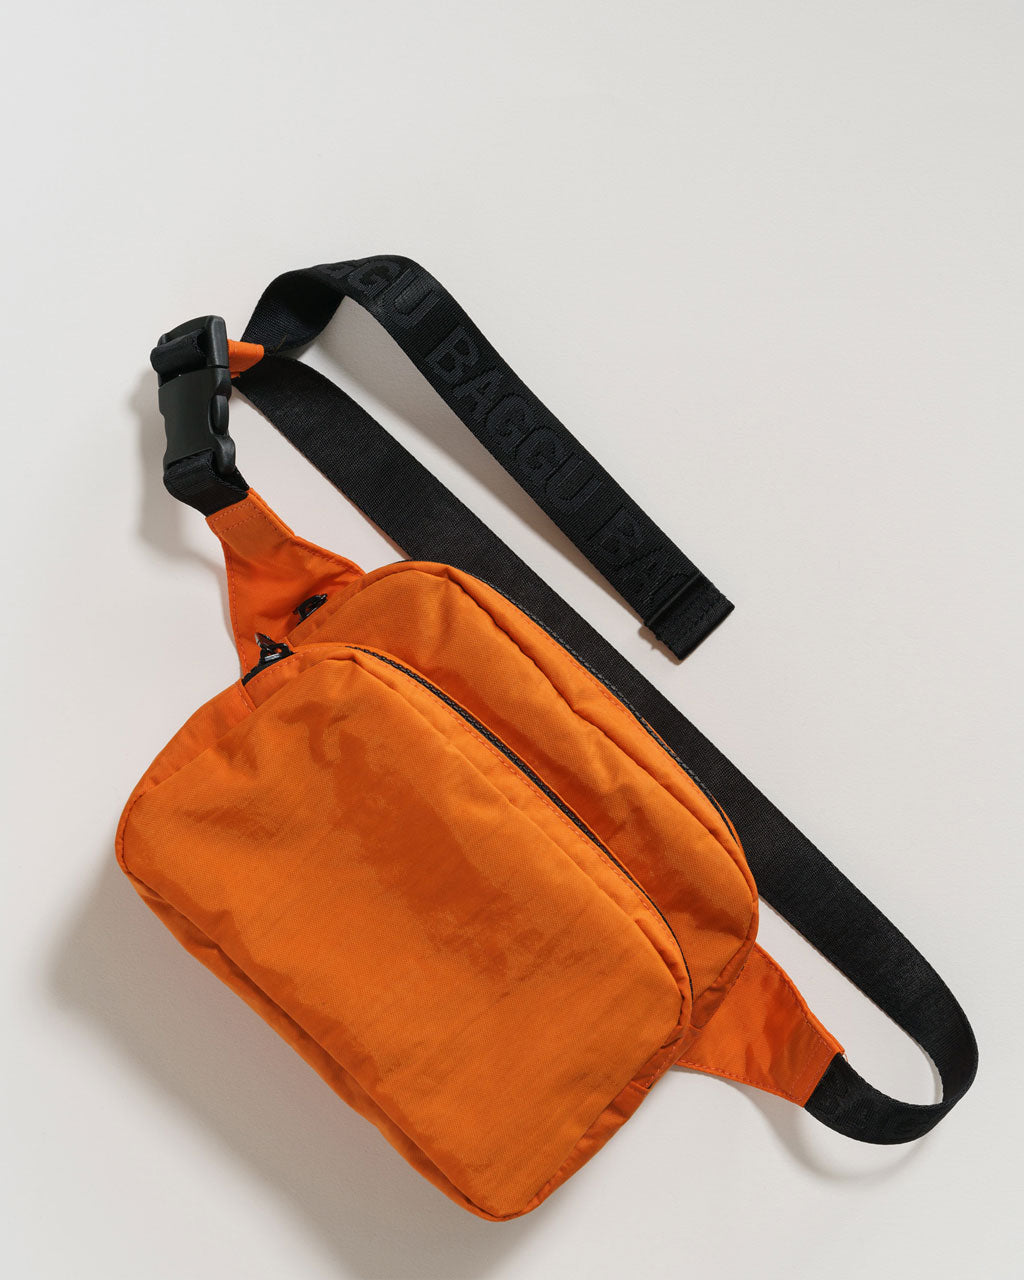 orange fanny pack